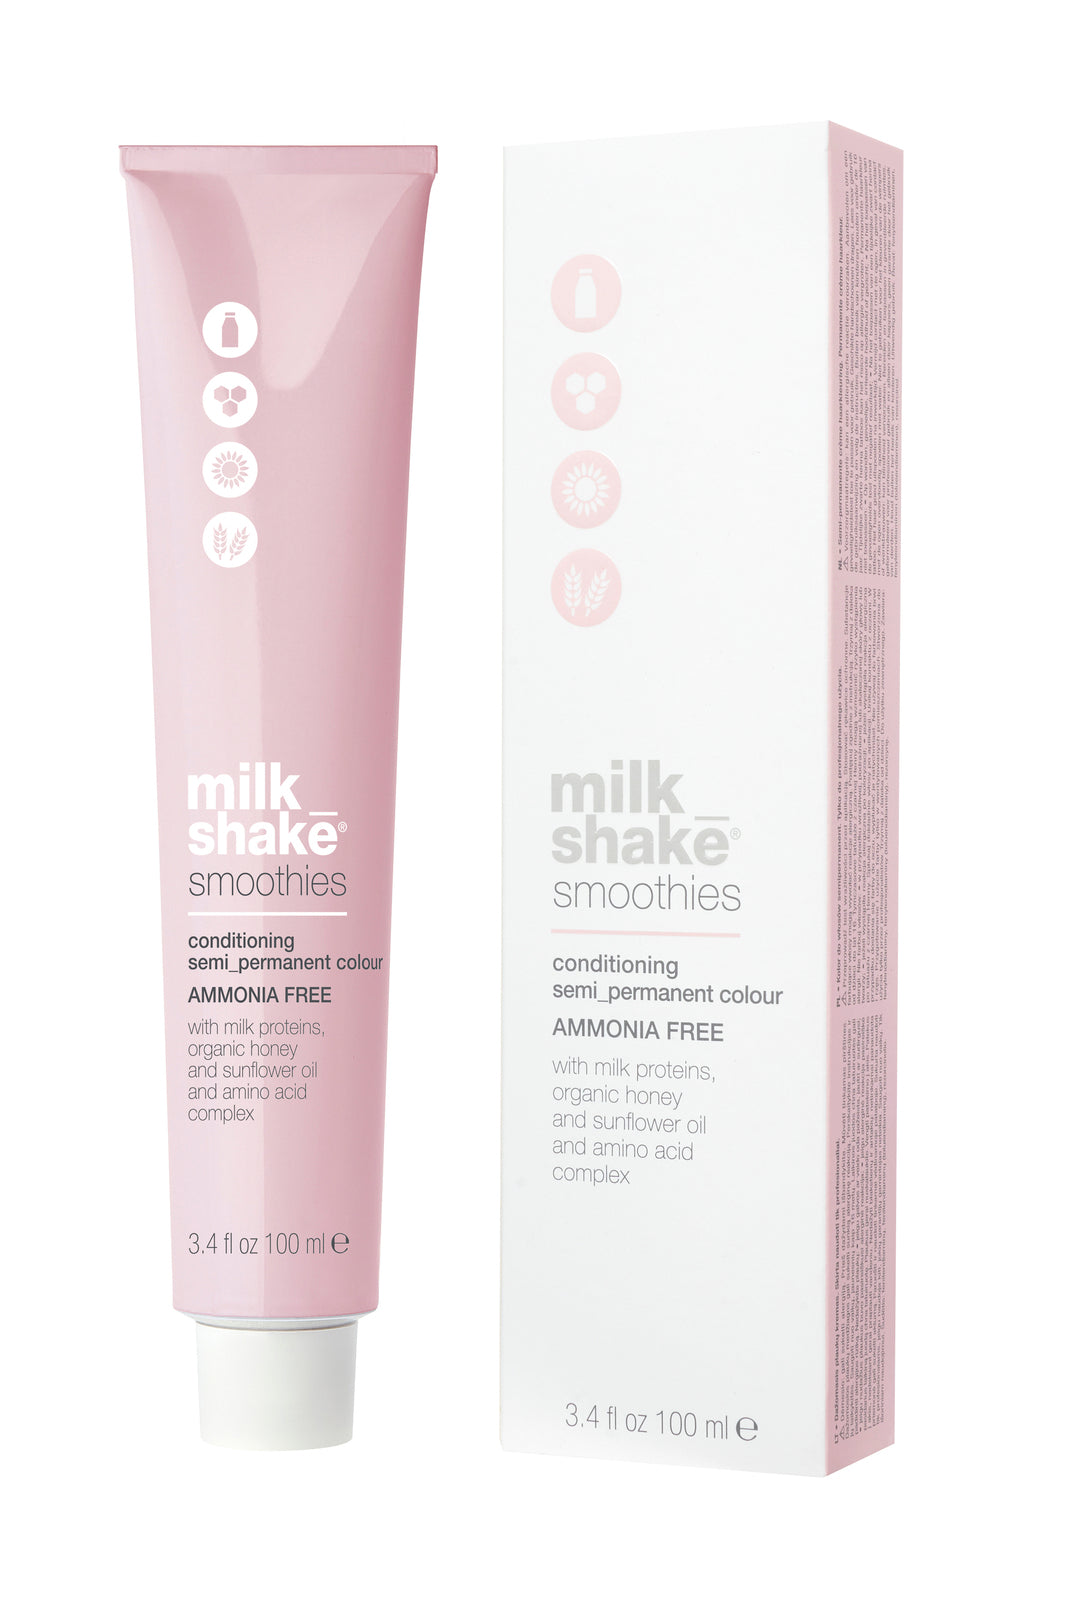 Milkshake smoothies semi-permanent color 9.08